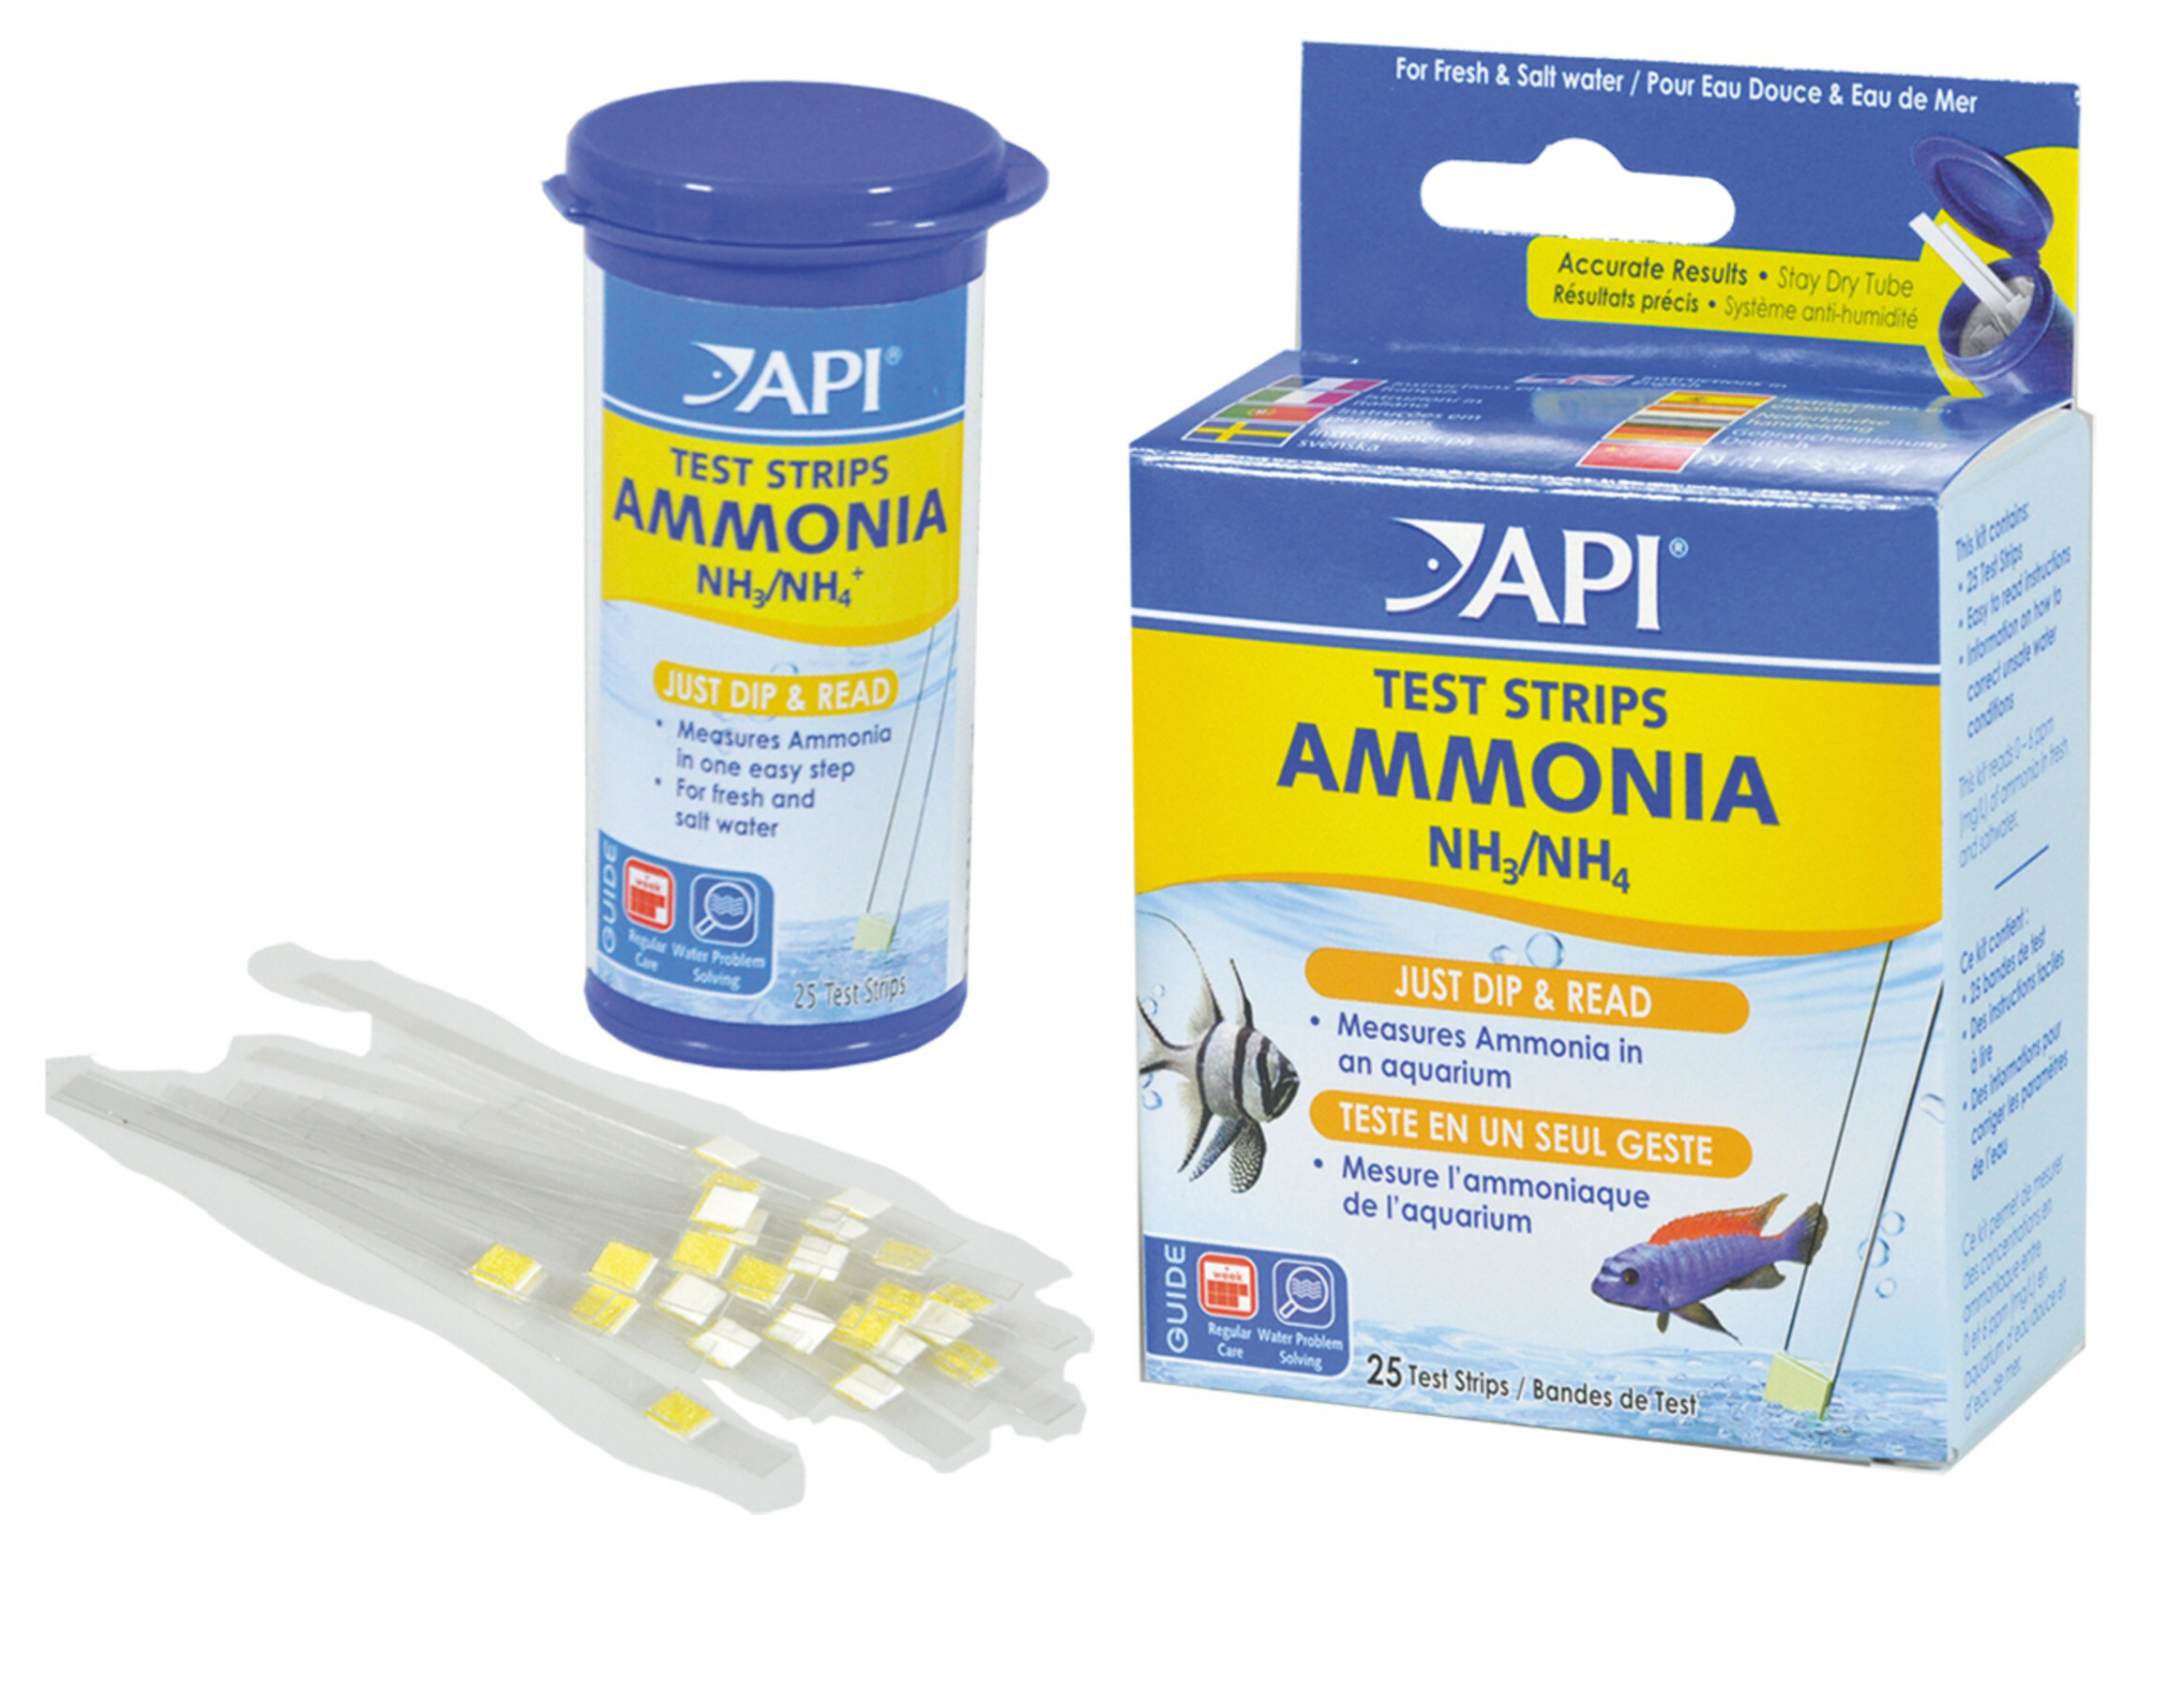 Ammonia test strip